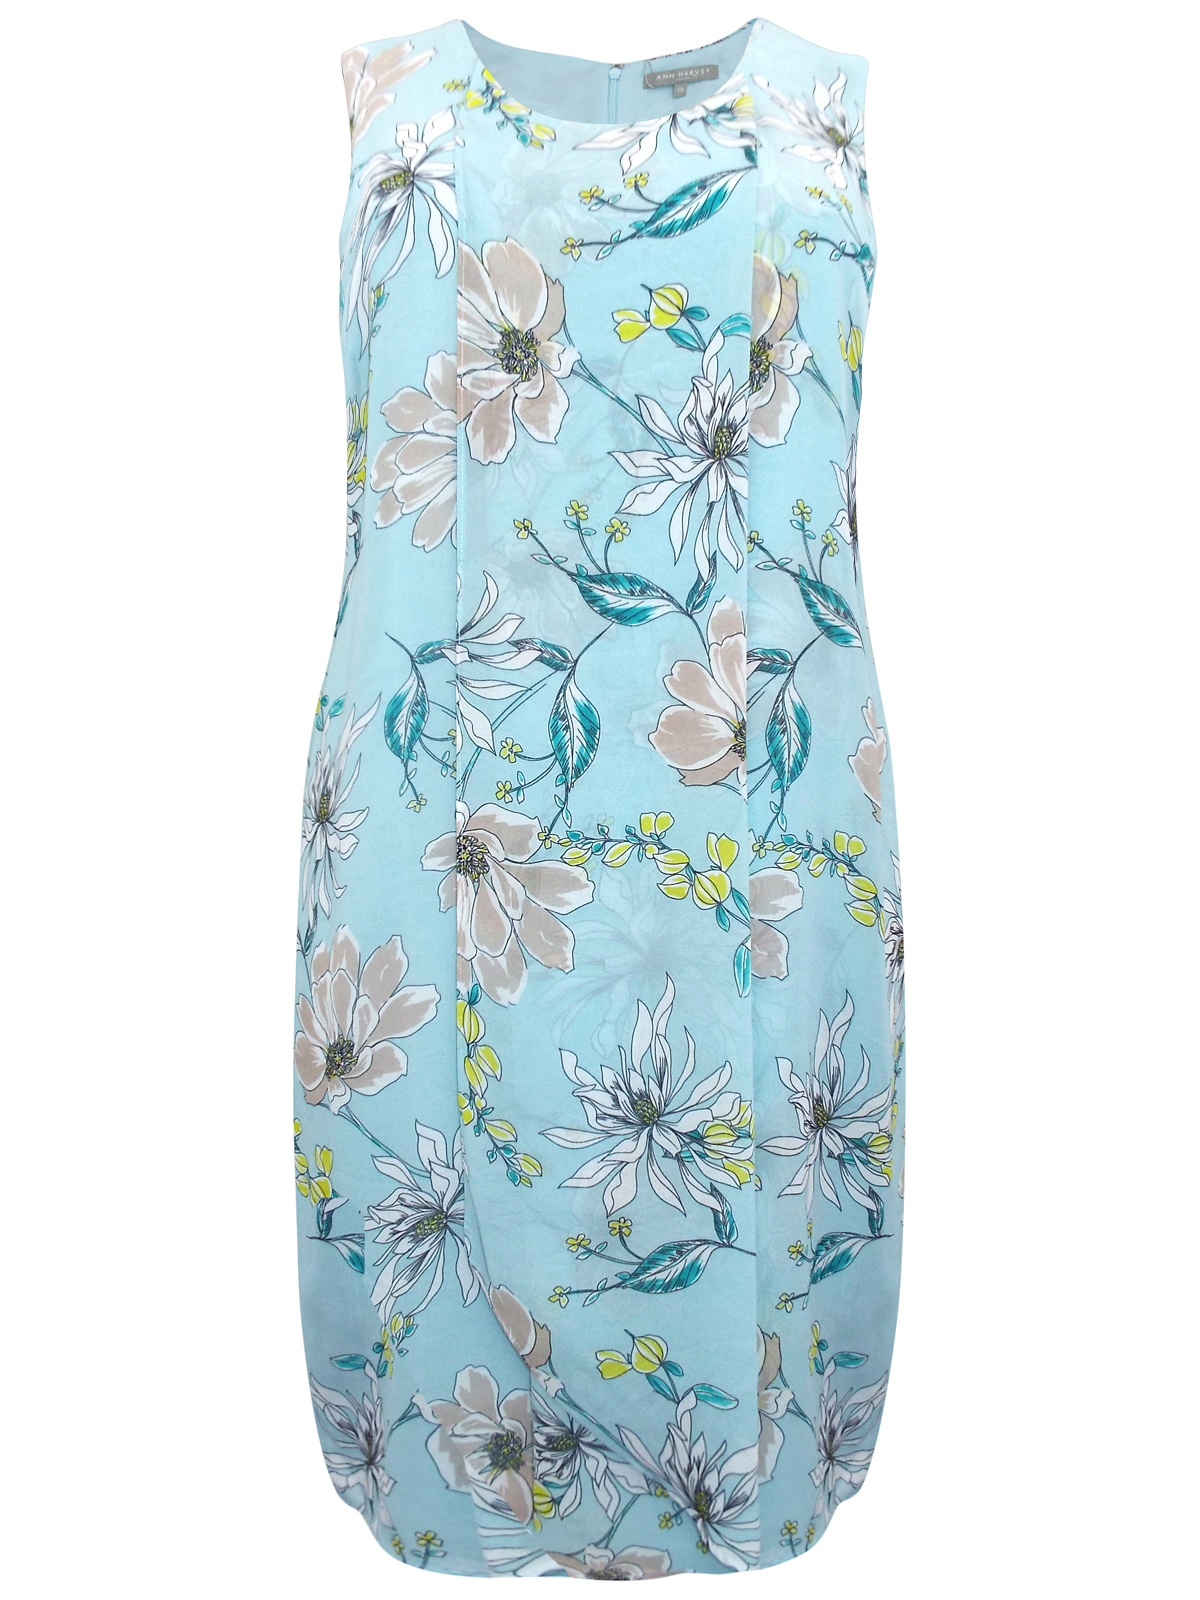 Ann Harv3y MINT Floral Sleeveless Botanical Blooms Dress - Plus Size 14 ...